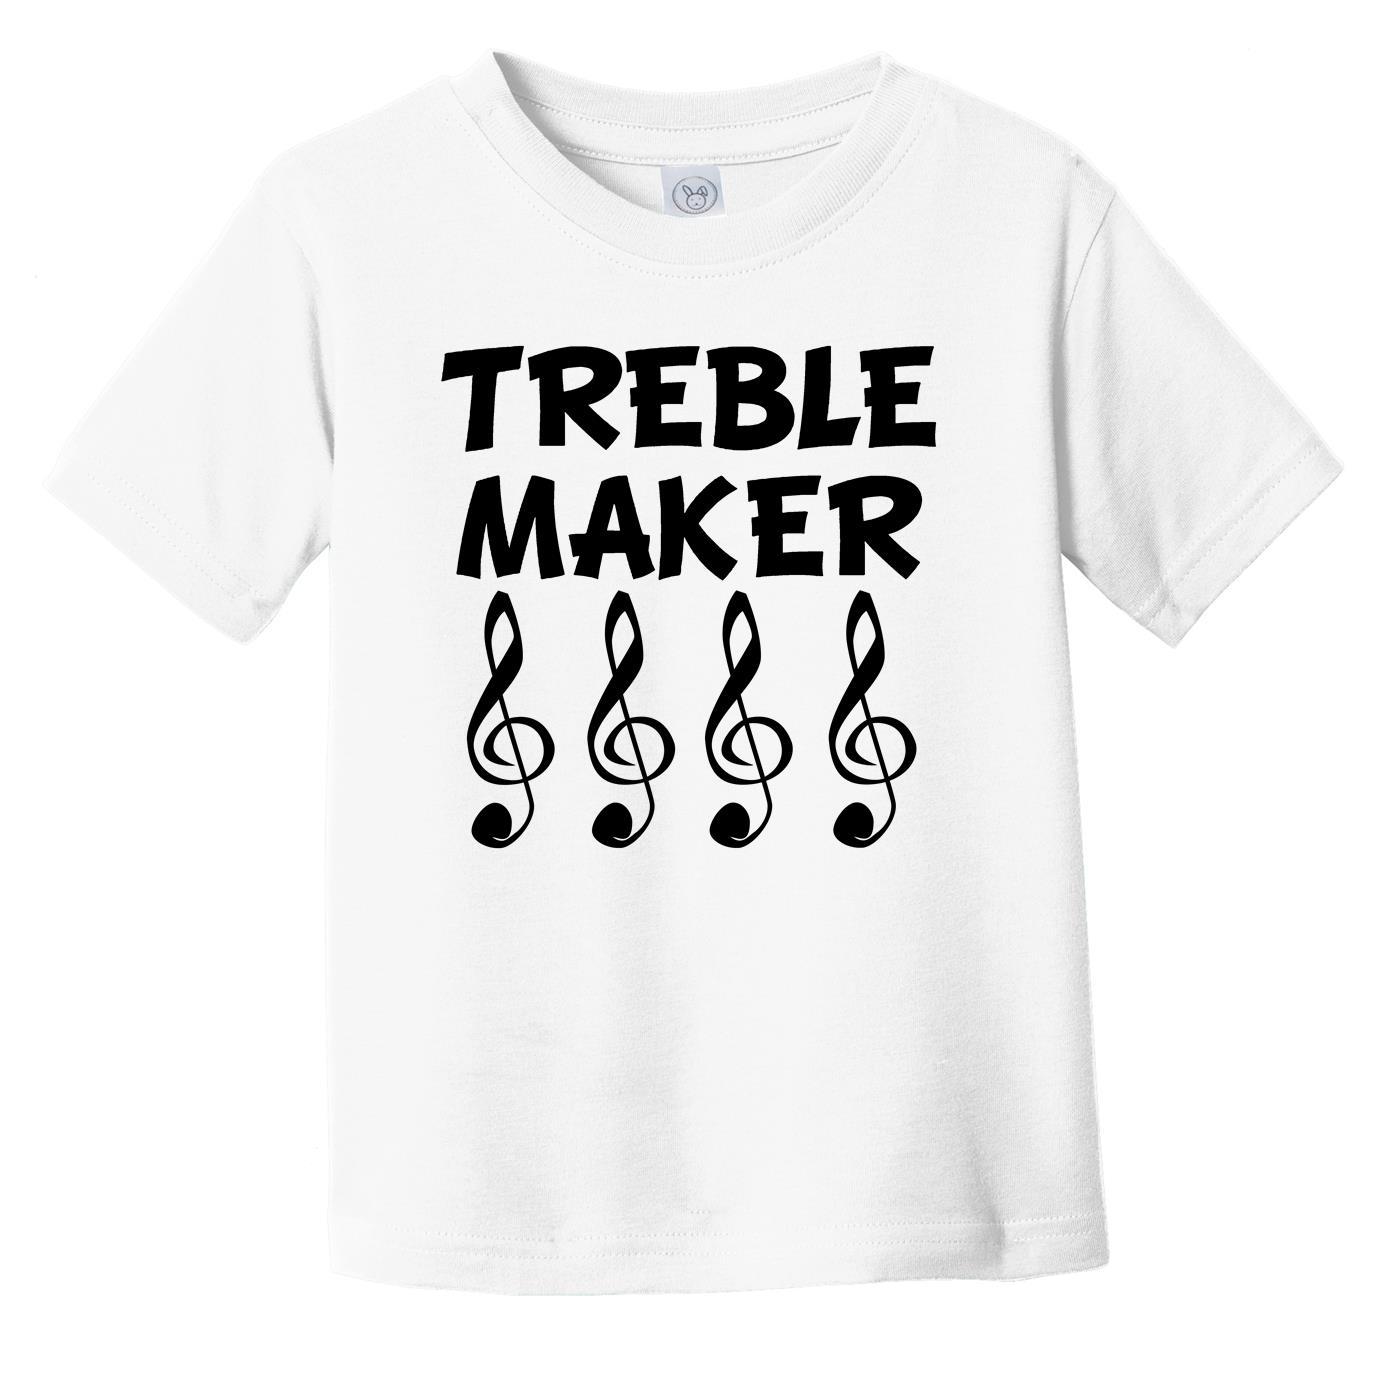 Treble Maker Funny Infant Toddler T-Shirt - Music Infant Toddler Shirt